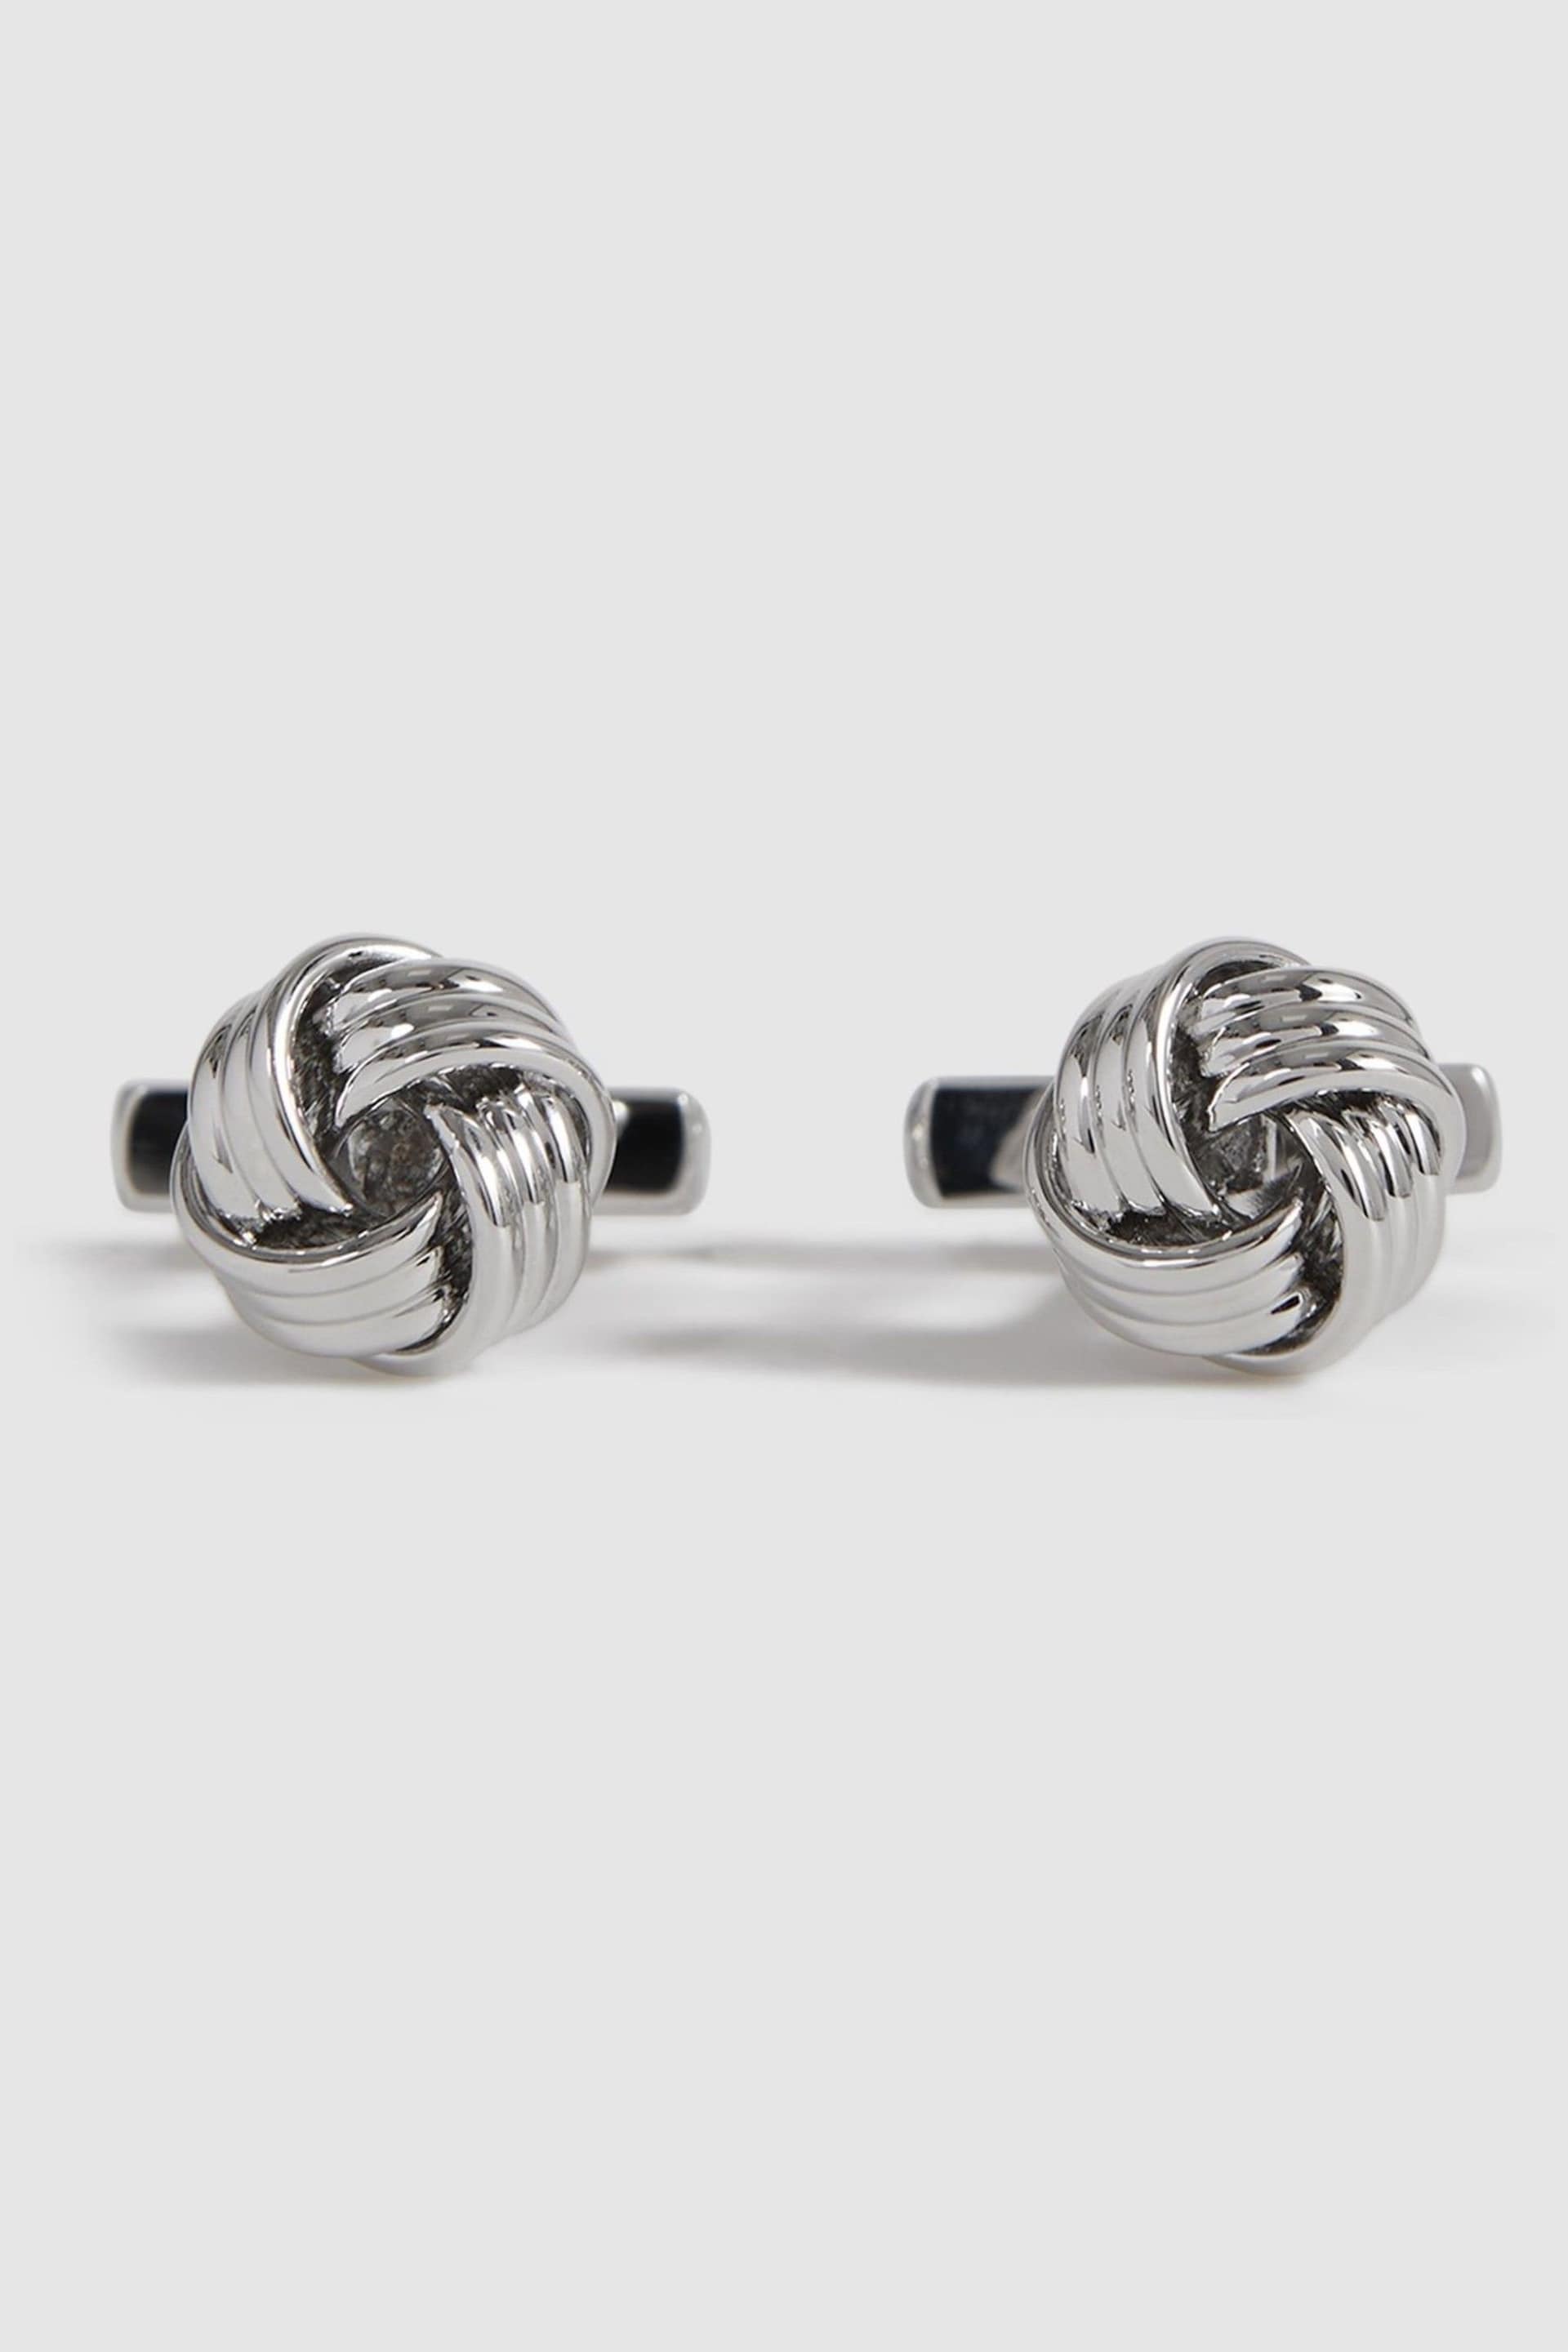 Reiss Silver Callum Knot Cufflinks - Image 1 of 5